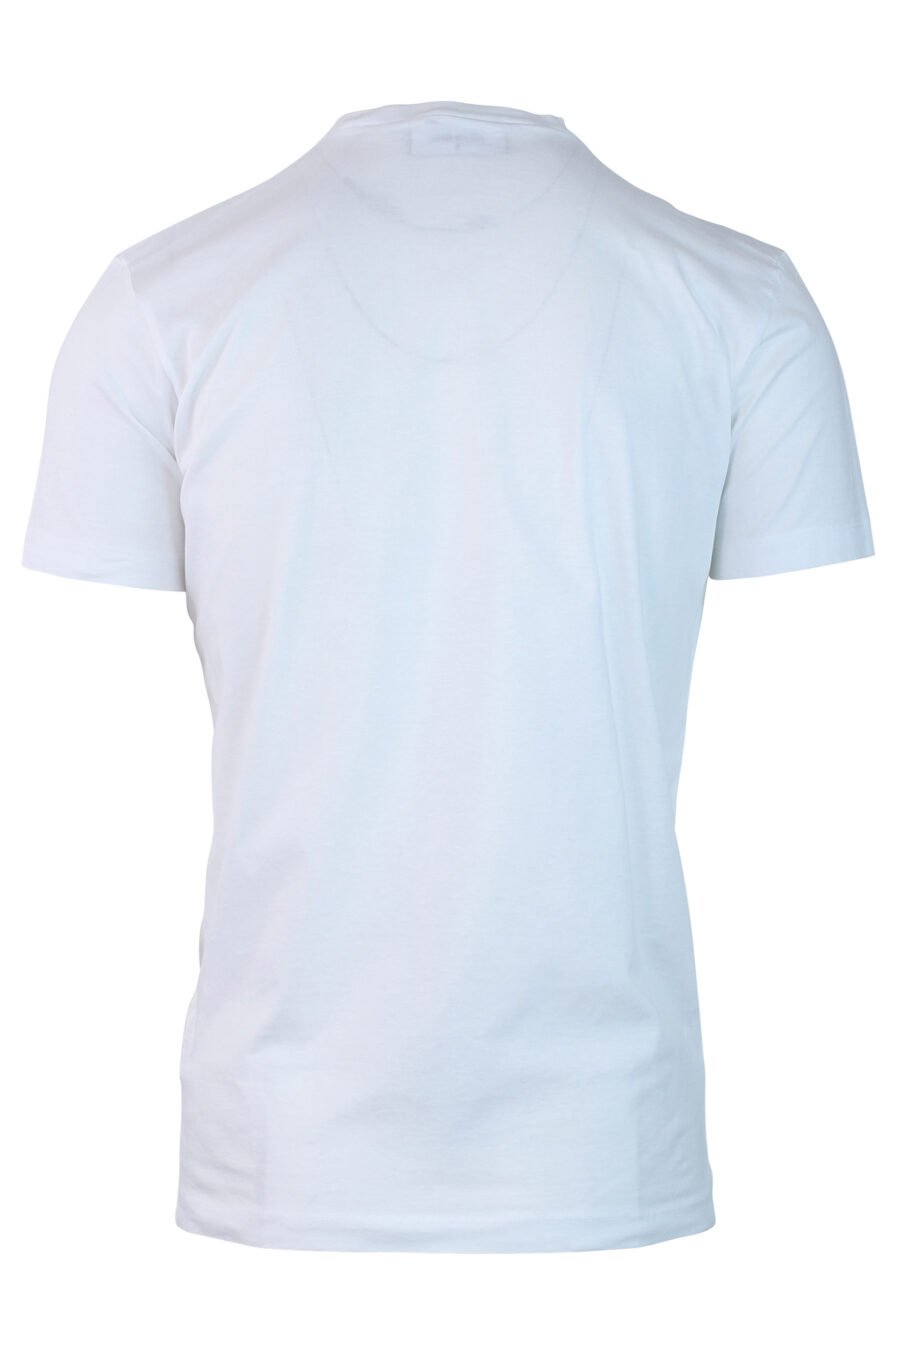 T-shirt blanc avec minilogue "icon" - IMG 0722